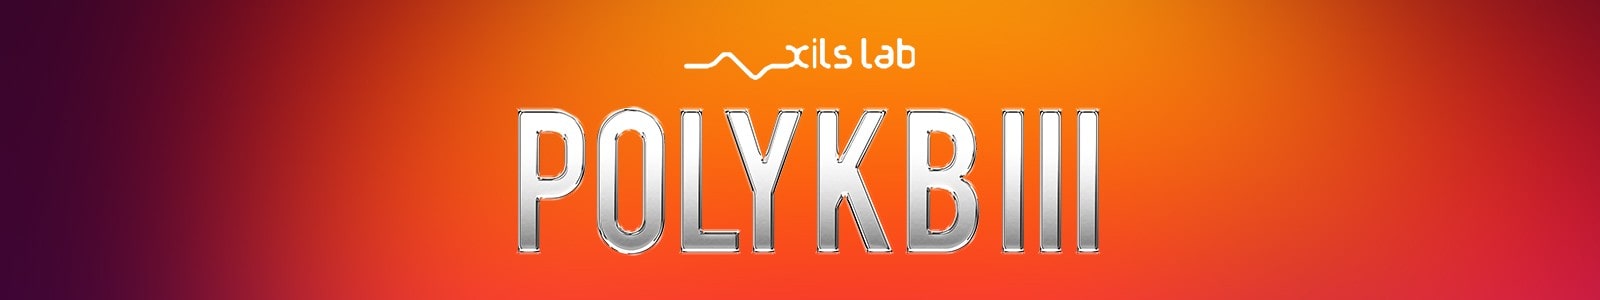 XILS-Lab PolyKB III